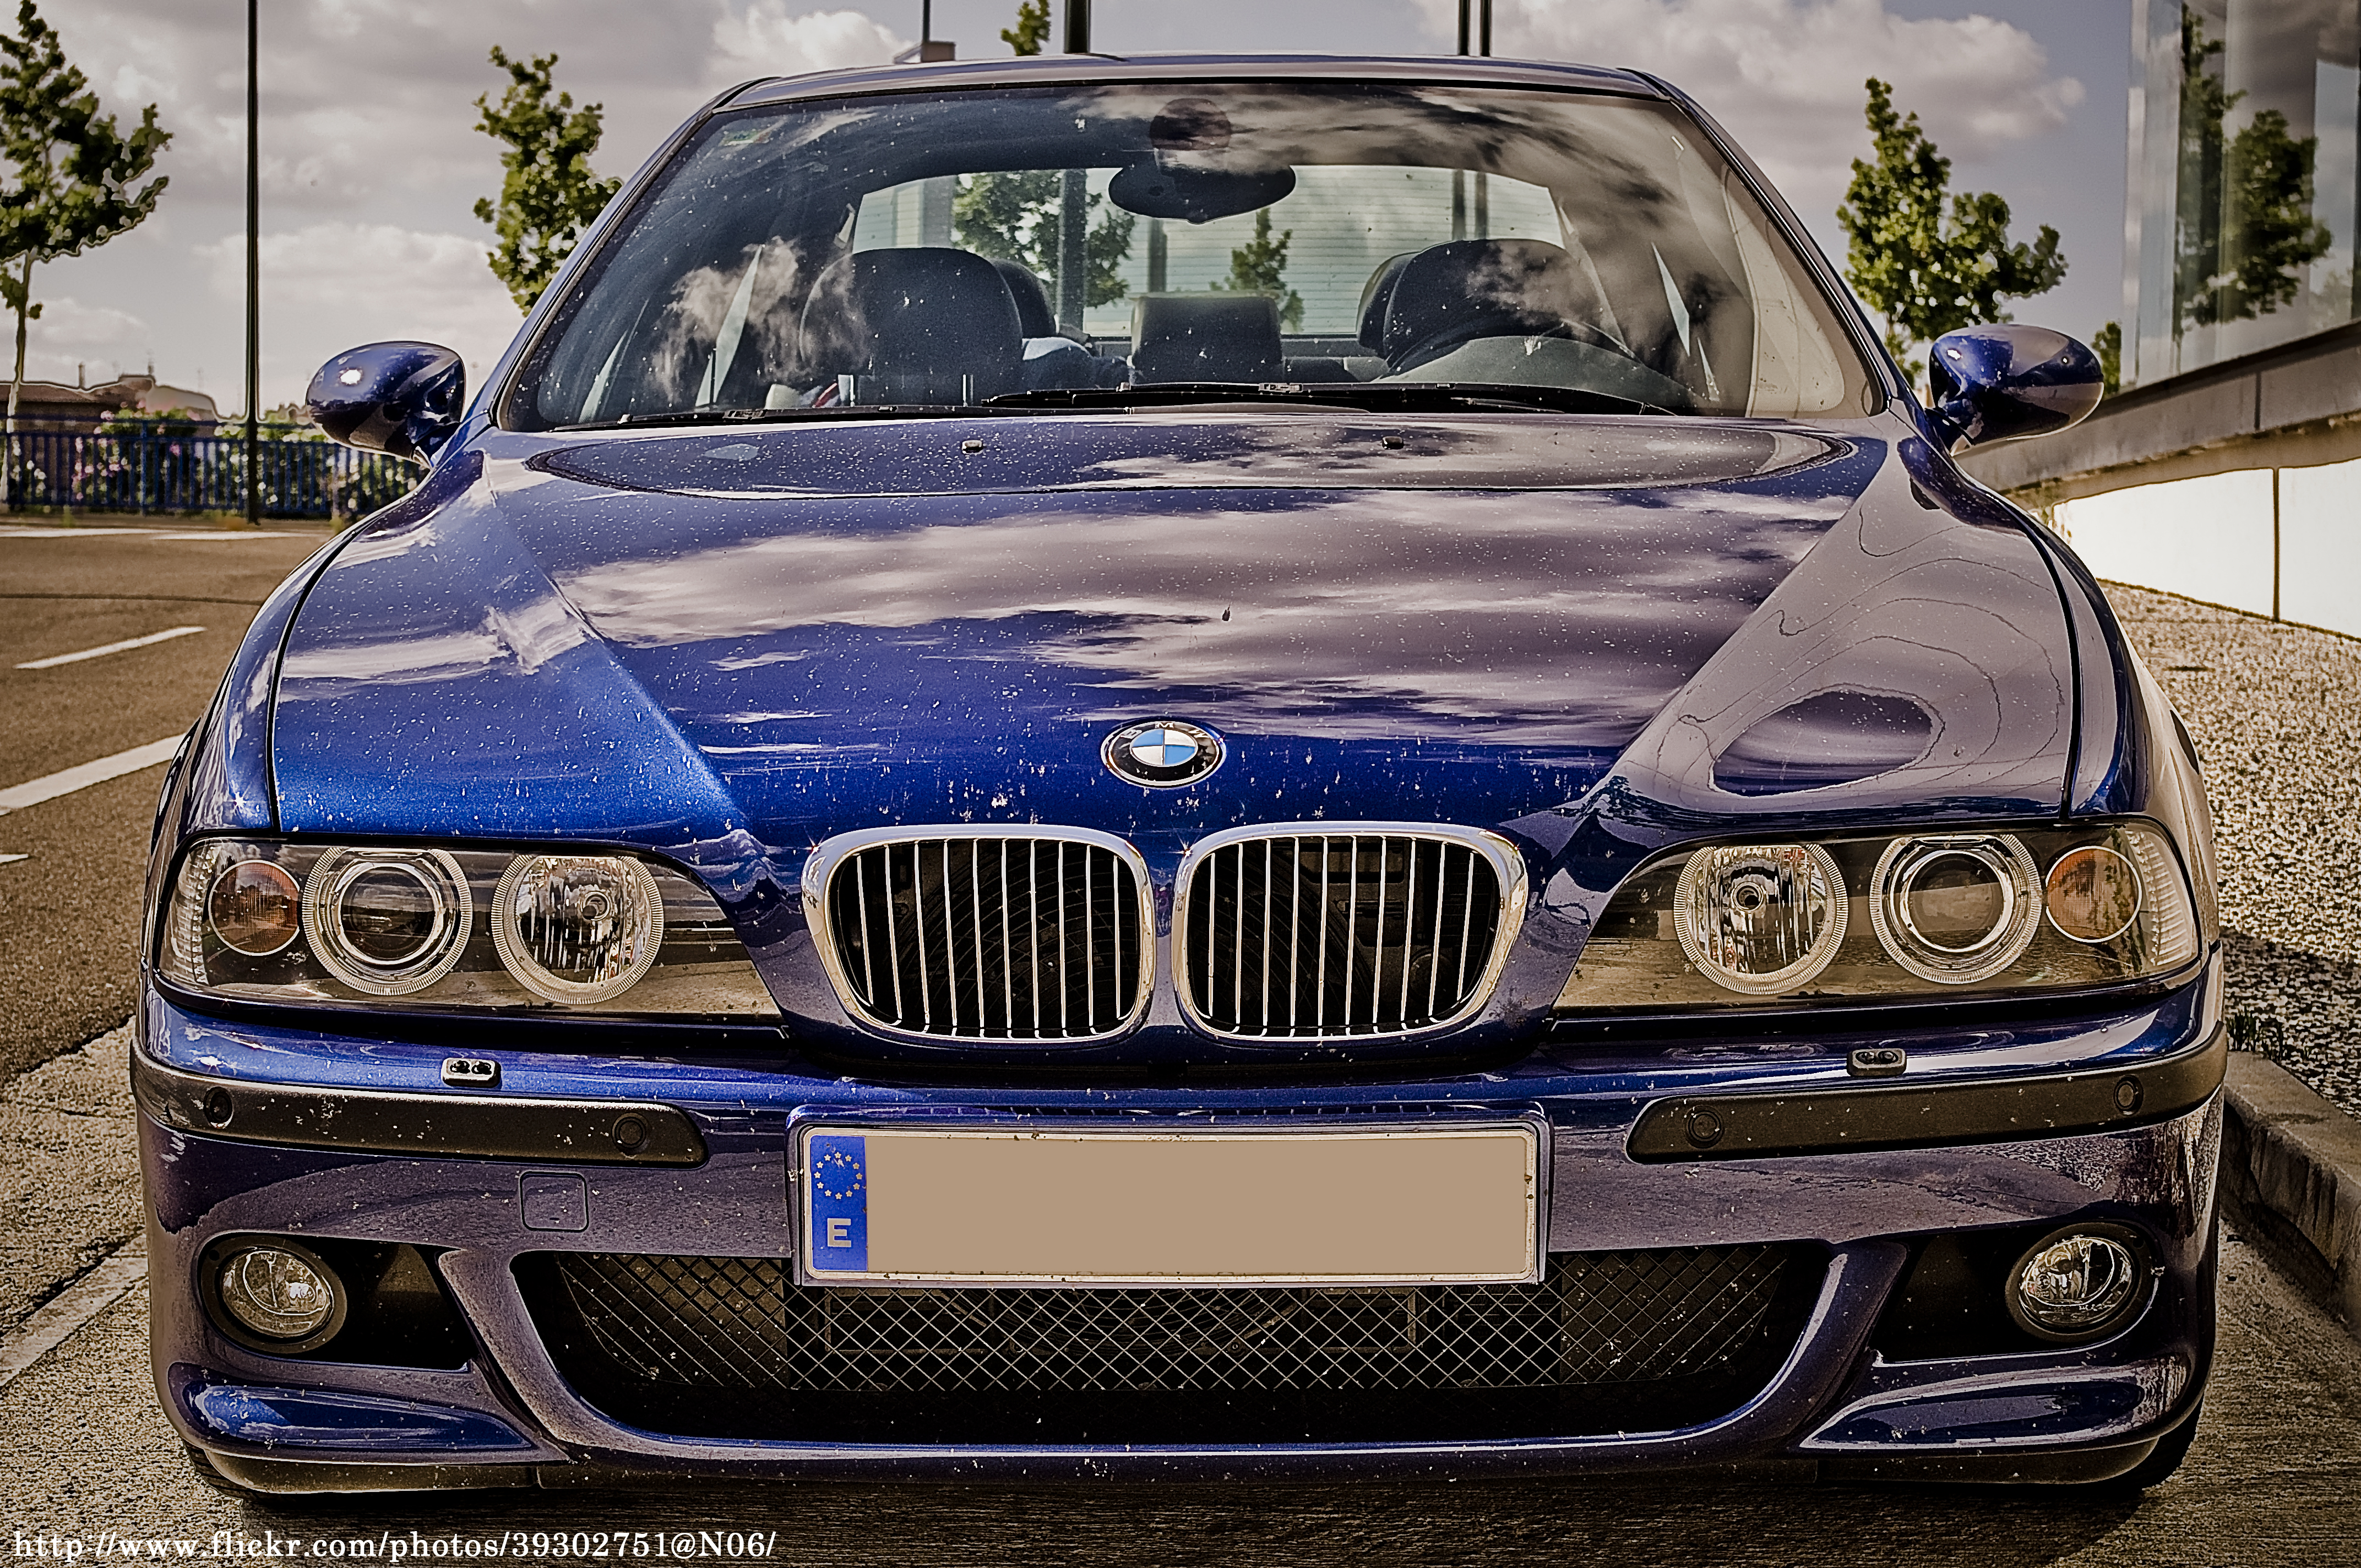 File:2003 BMW M5 (E39) (6307329802).jpg - Wikimedia Commons